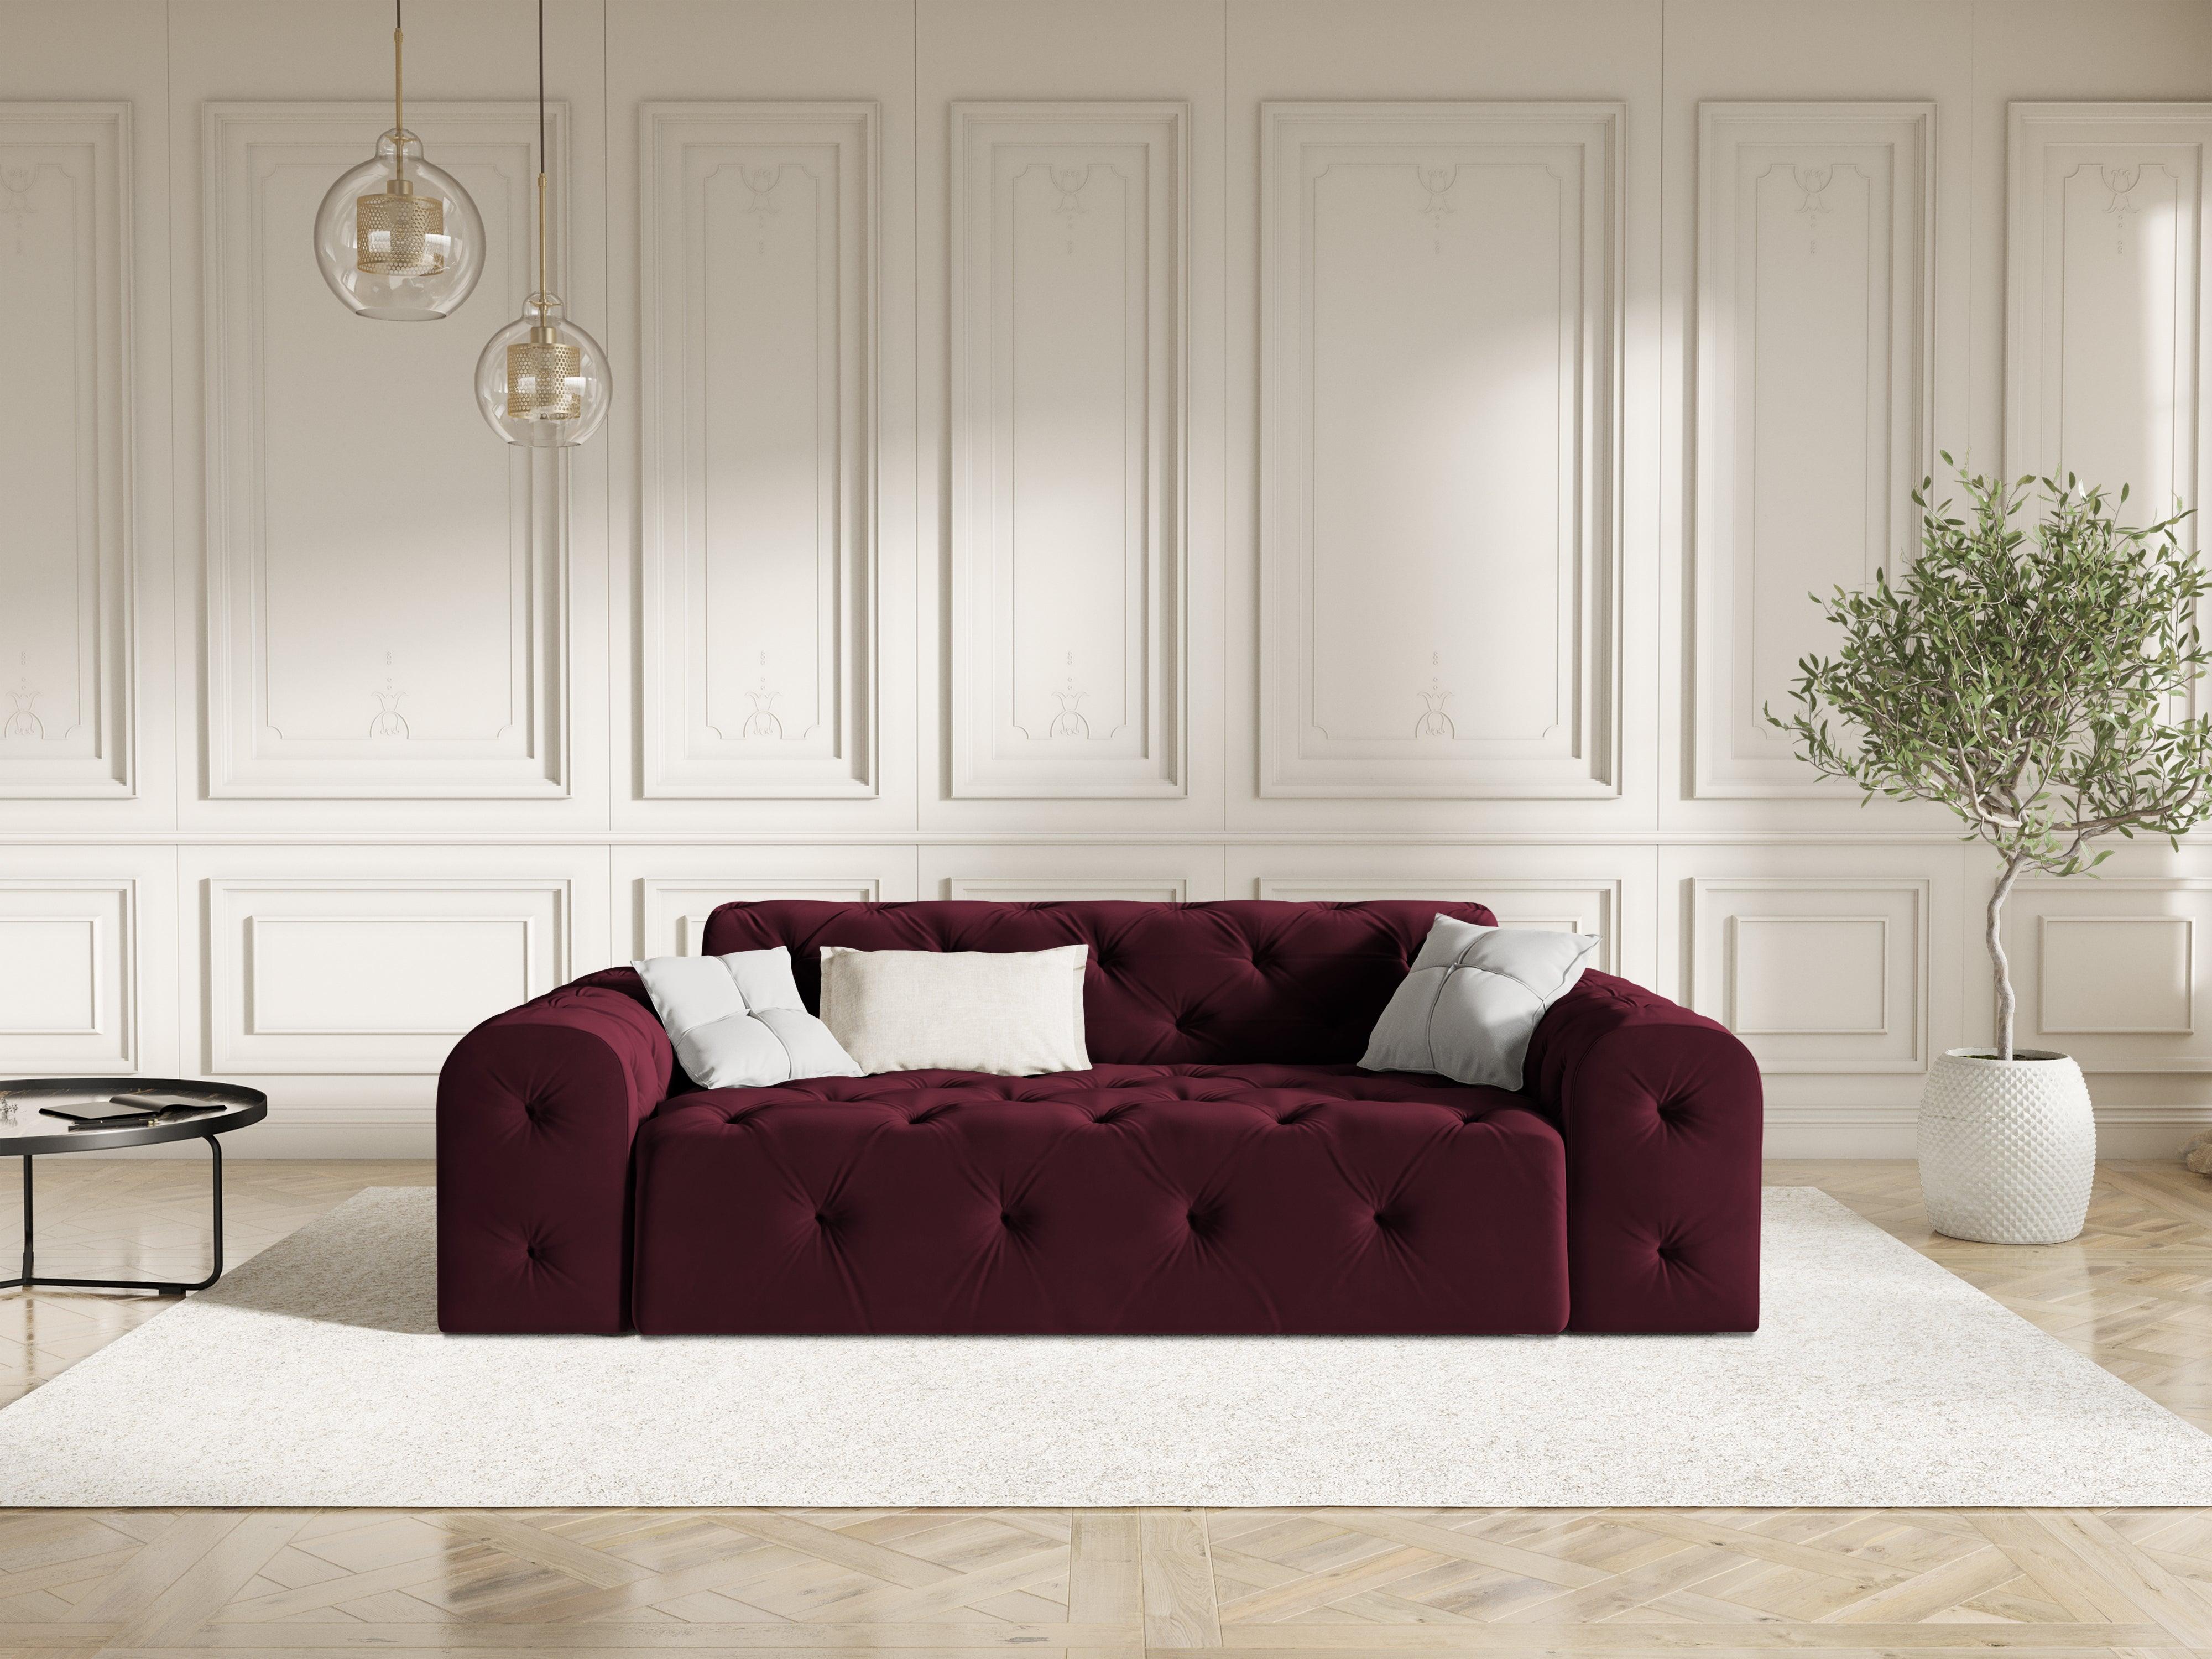 Velvet Sofa, "Candice", 3 Seats, 230x94x80
Made in Europe, Micadoni, Eye on Design